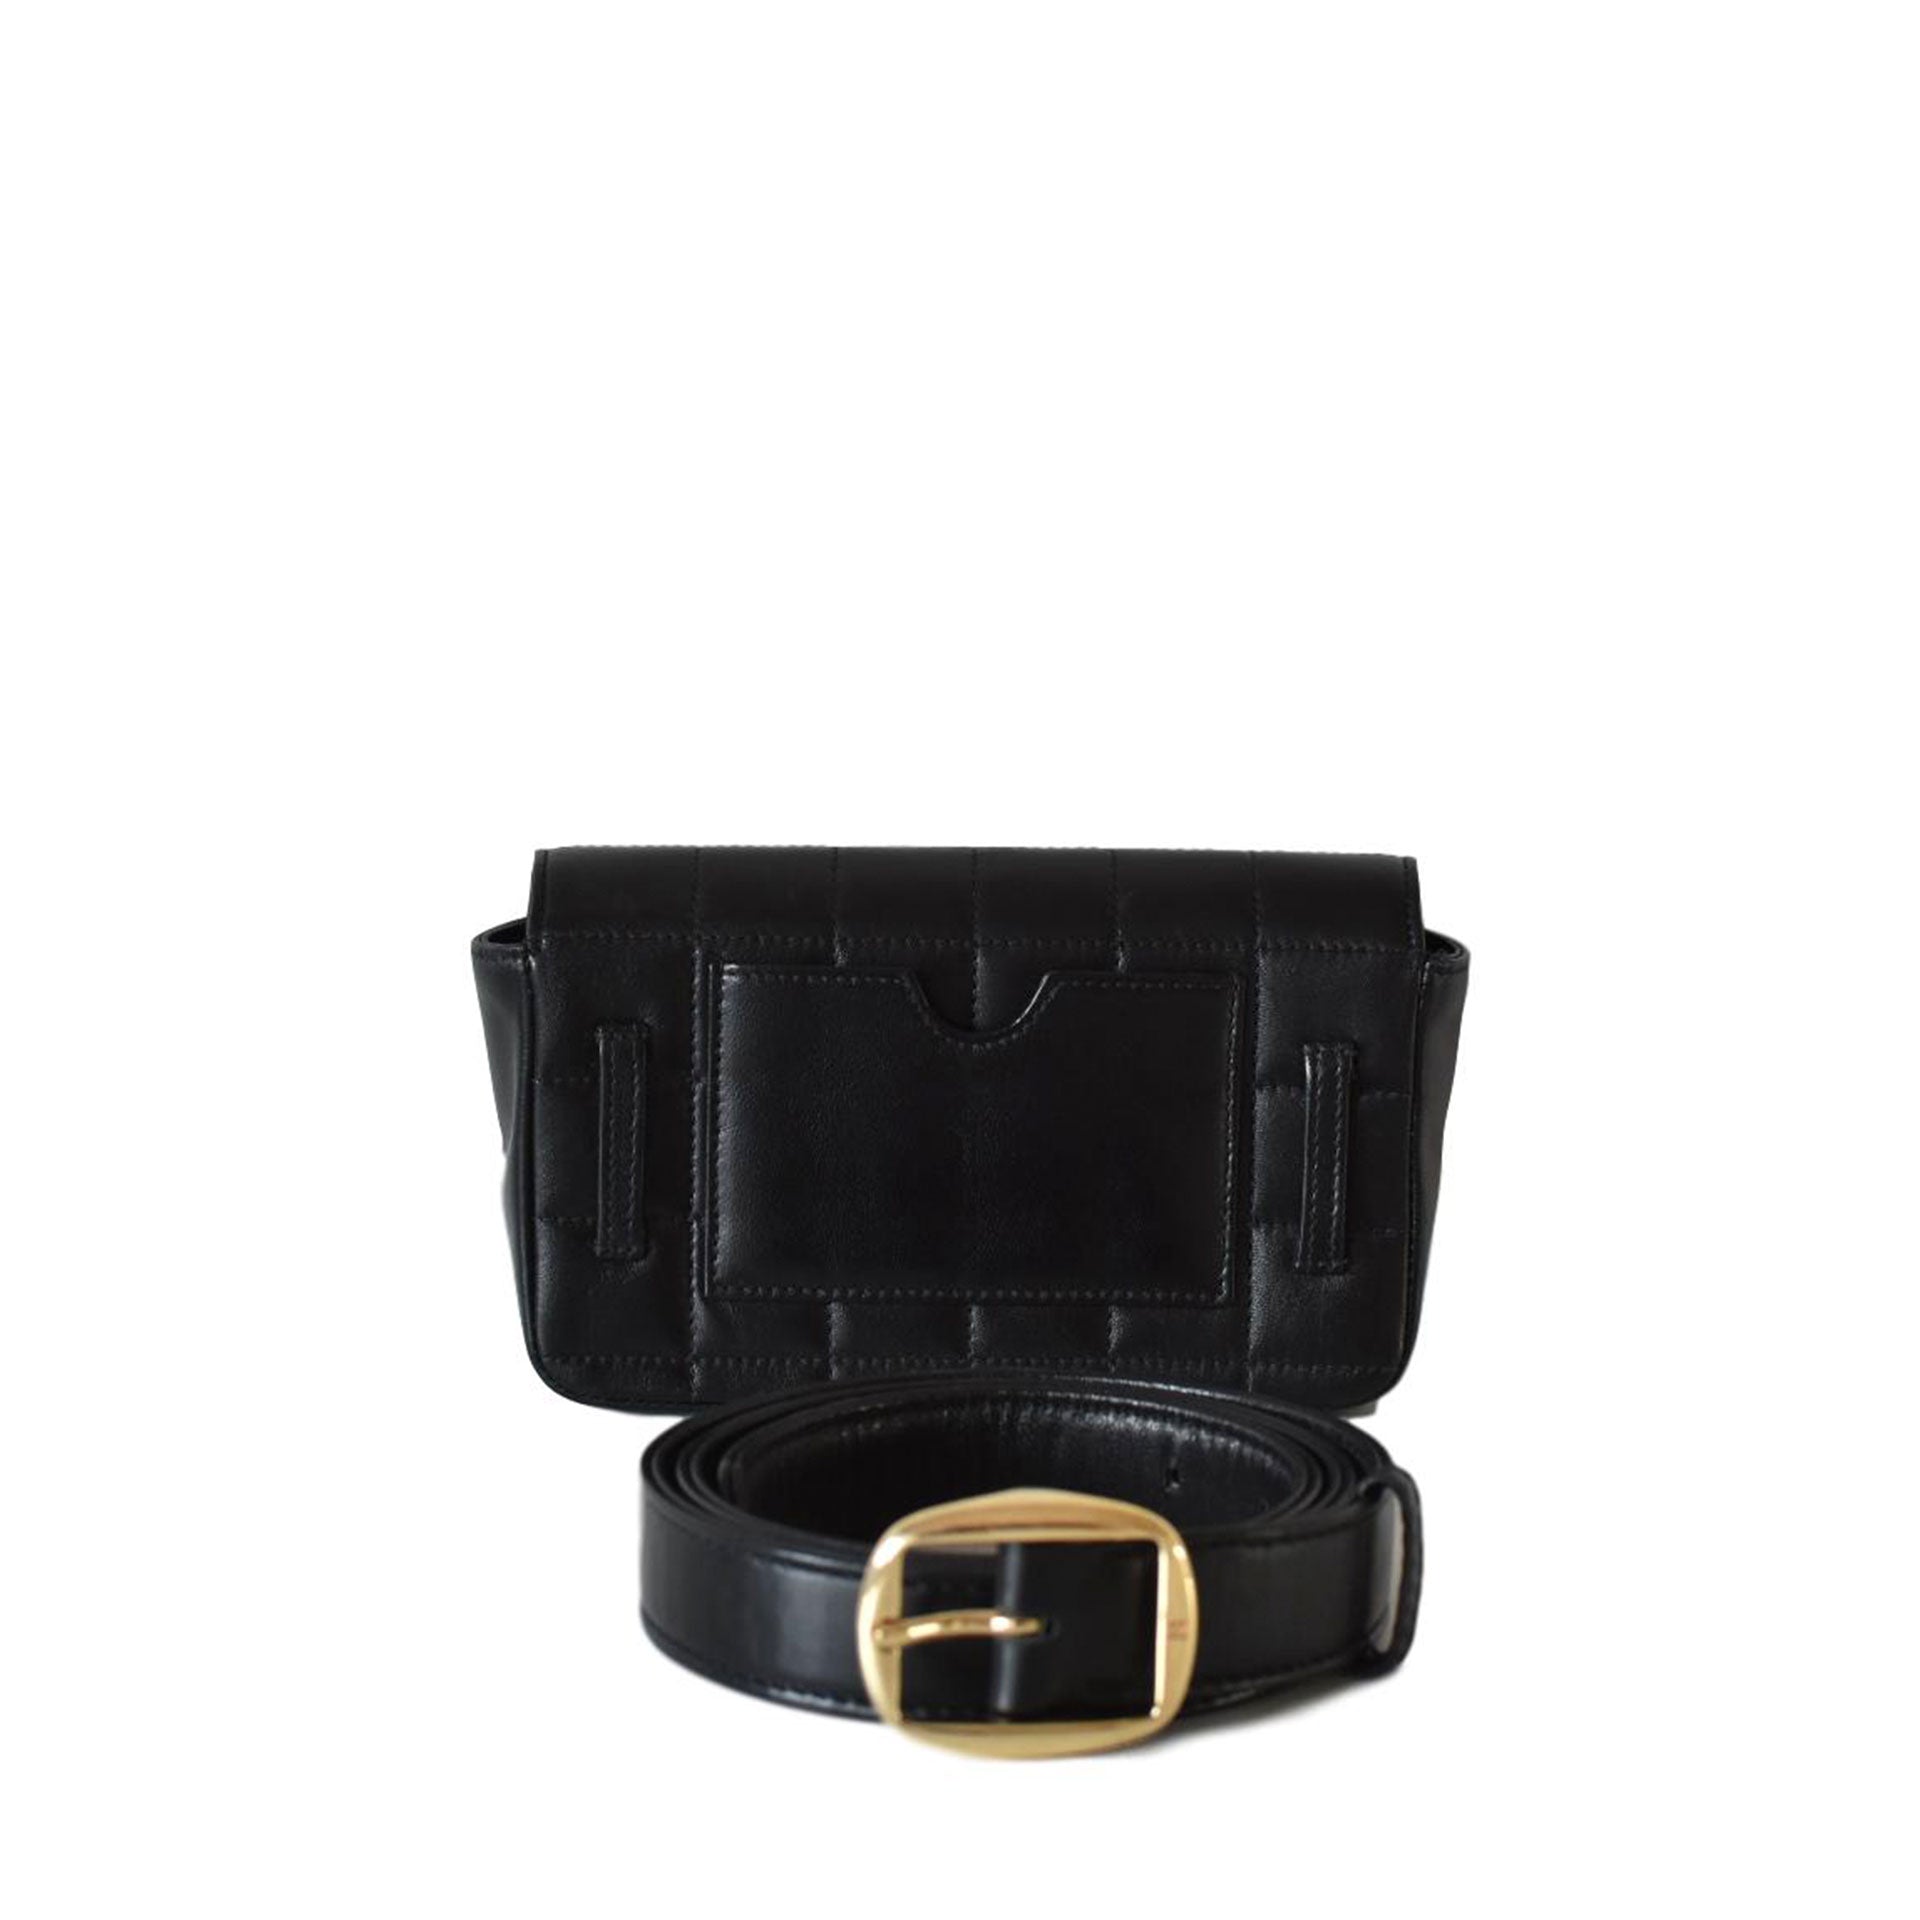 Chanel Belt Rare Vintage Mini Fanny Pack Waist Brown Leather Cross Body Bag